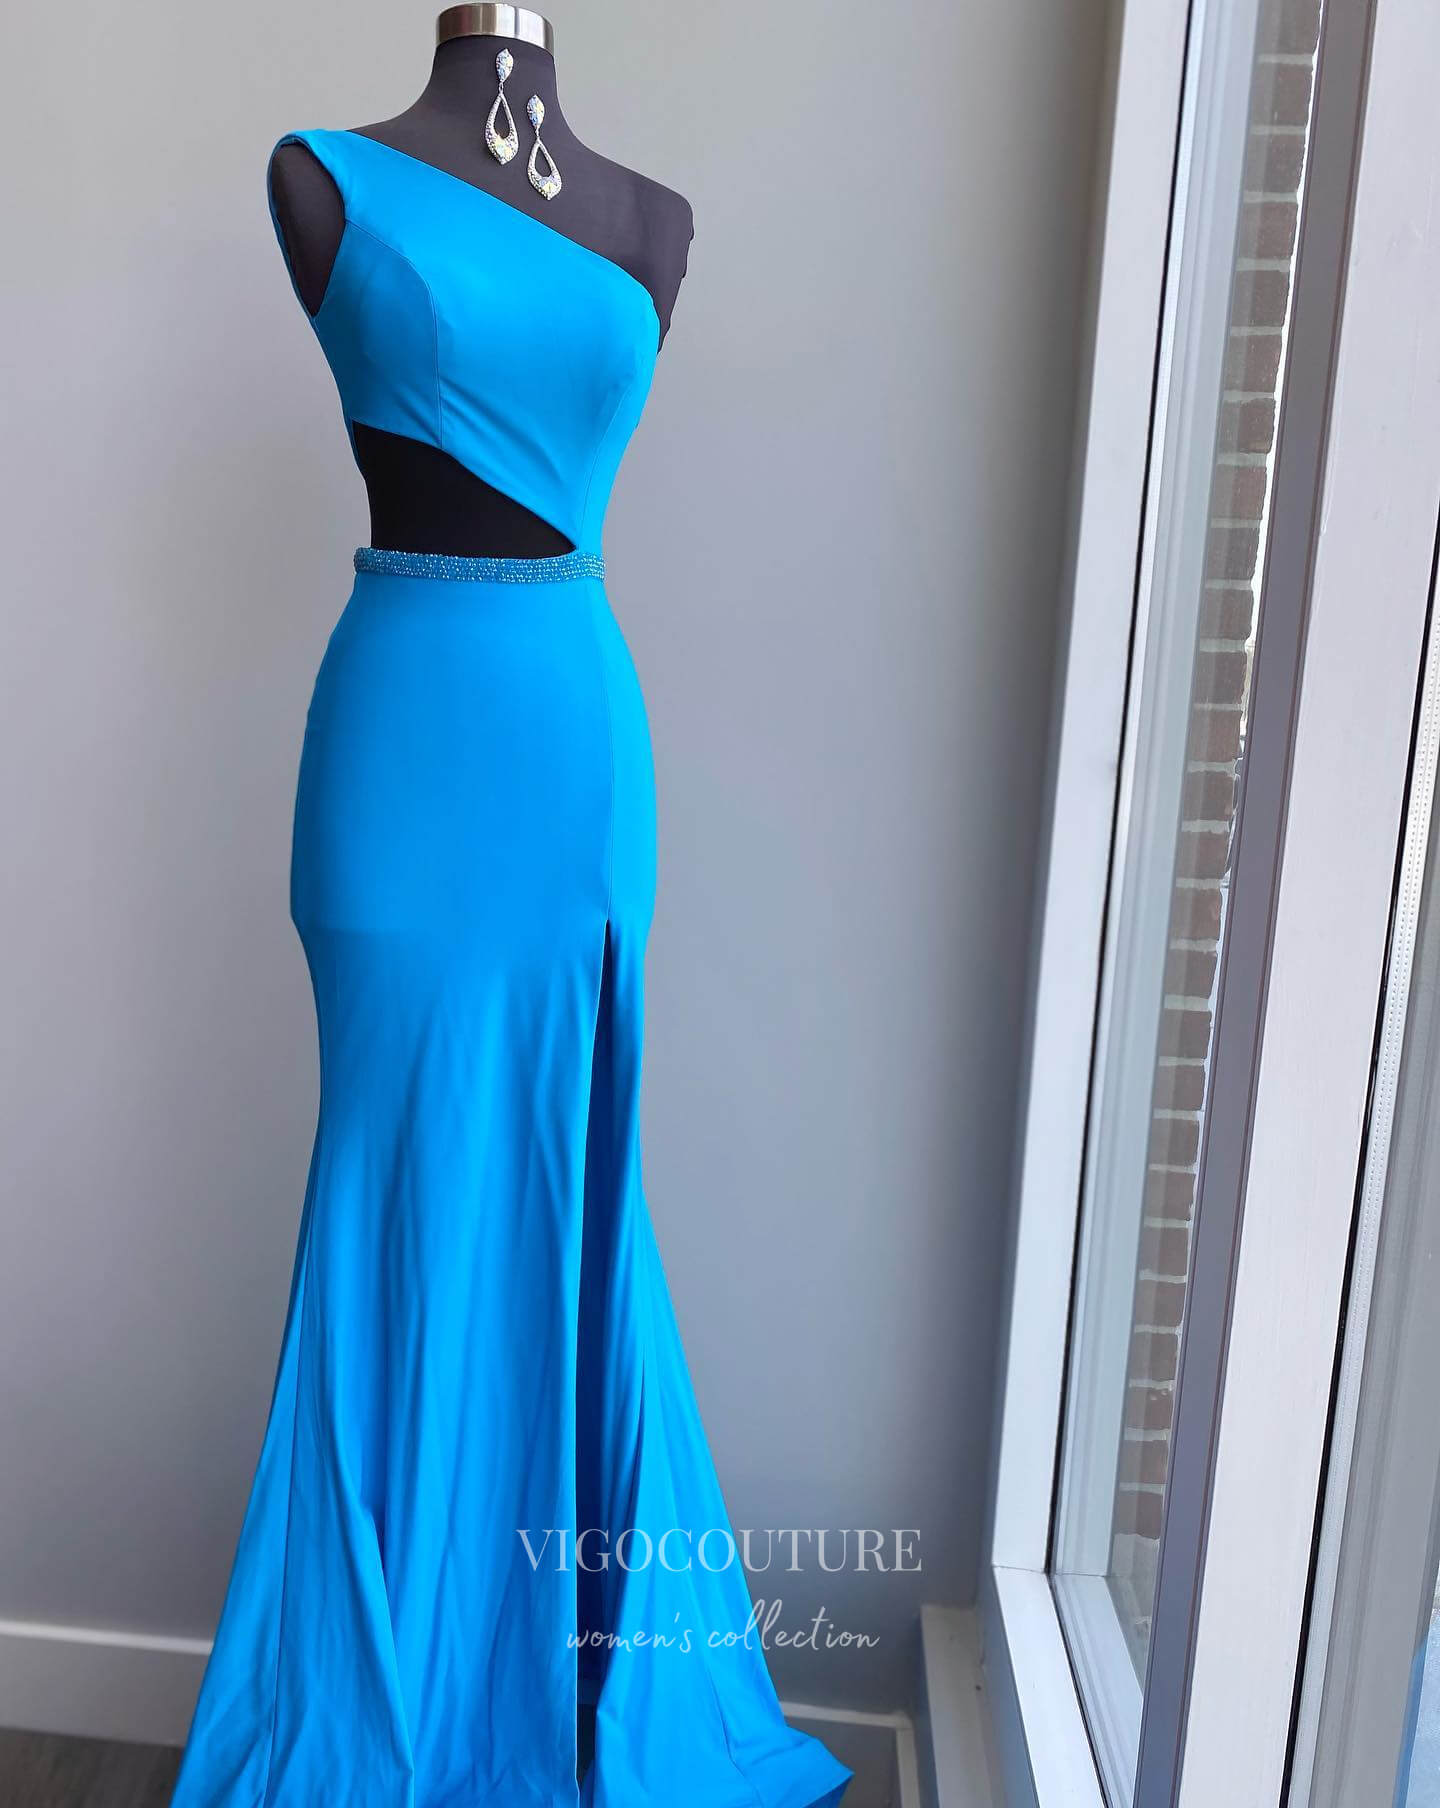 vigocouture-Black Mermaid Prom Dress With Slit One Shoulder Evening Dress 20933-Prom Dresses-vigocouture-Blue-US2-